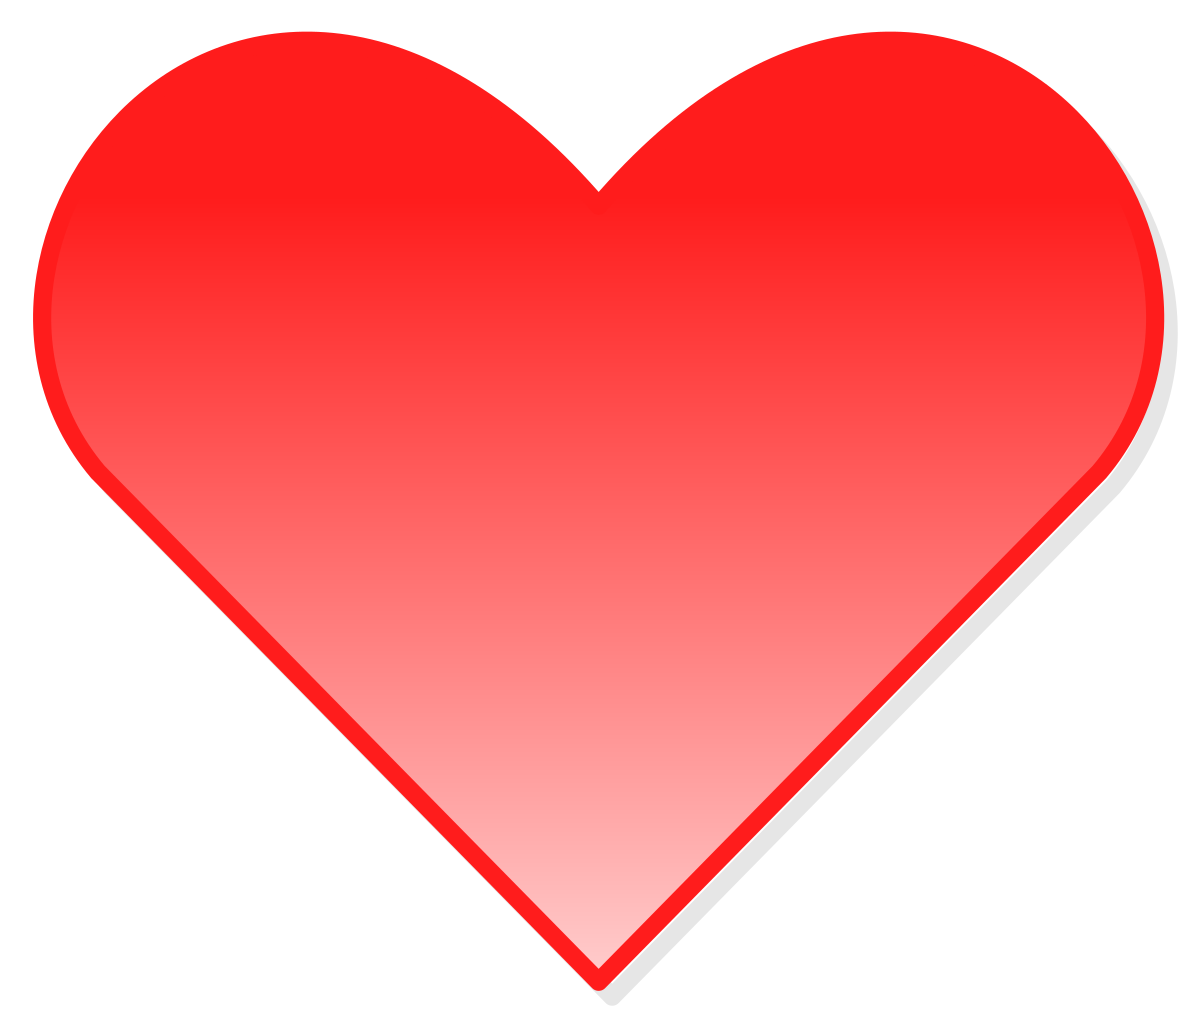 File:Drawn heart.svg - Wikipedia